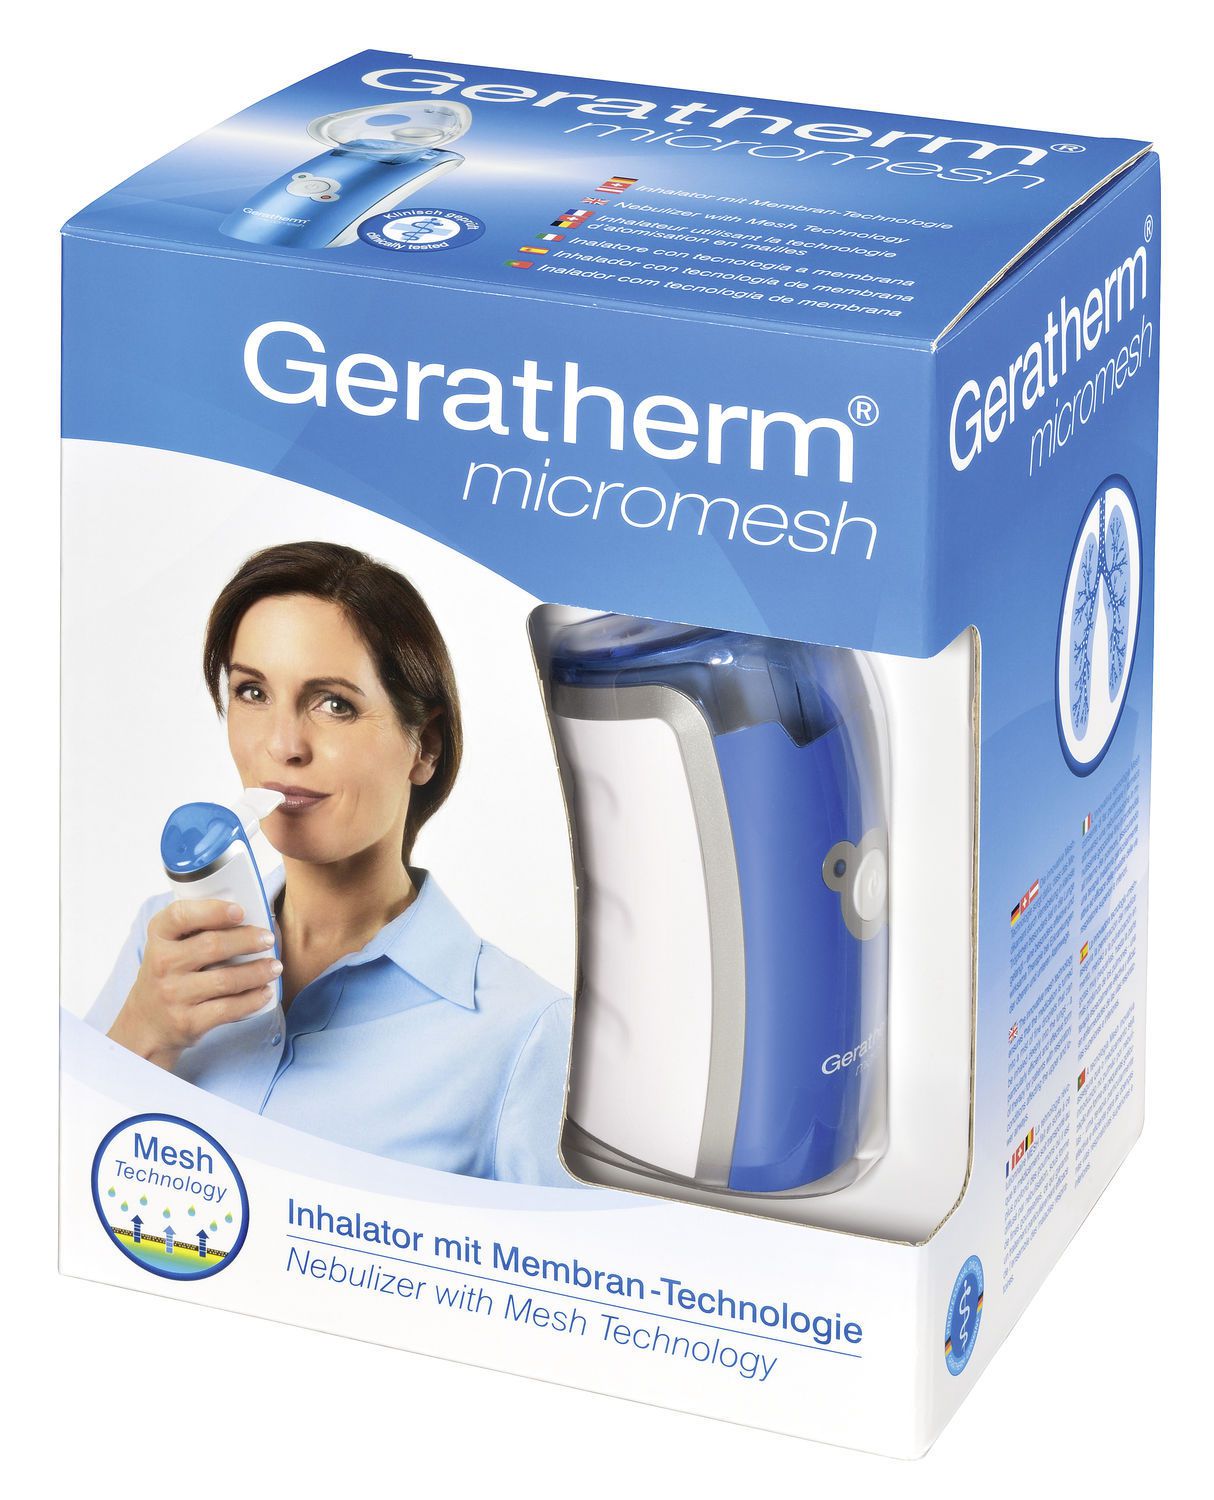 Pneumatic nebulizer / vibrating mesh Geratherm